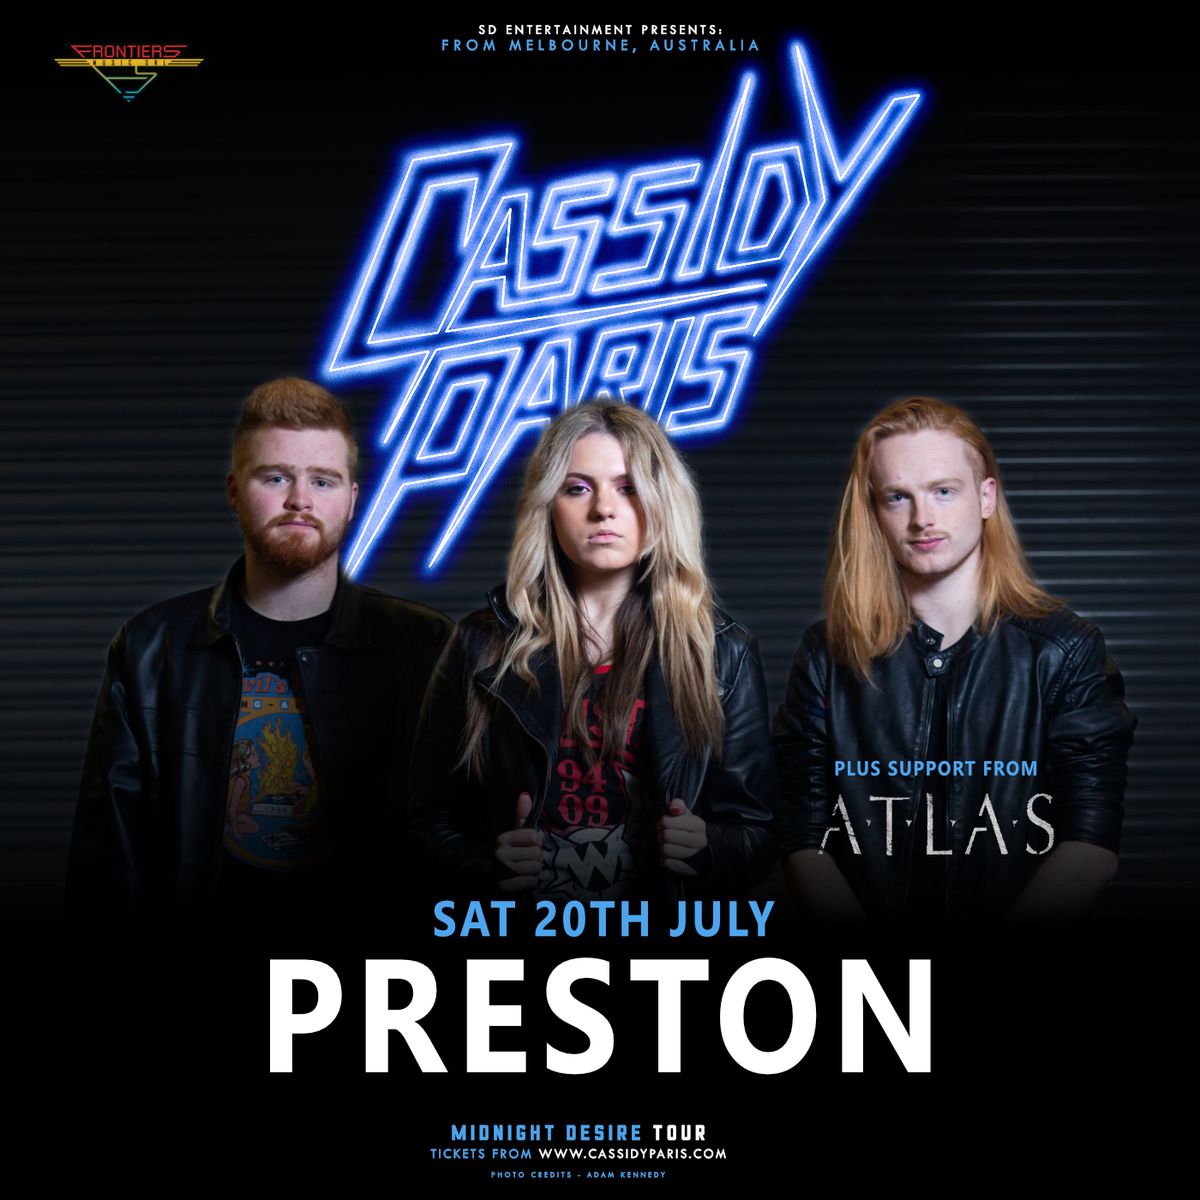 CASSIDY PARIS + Atlas - Preston